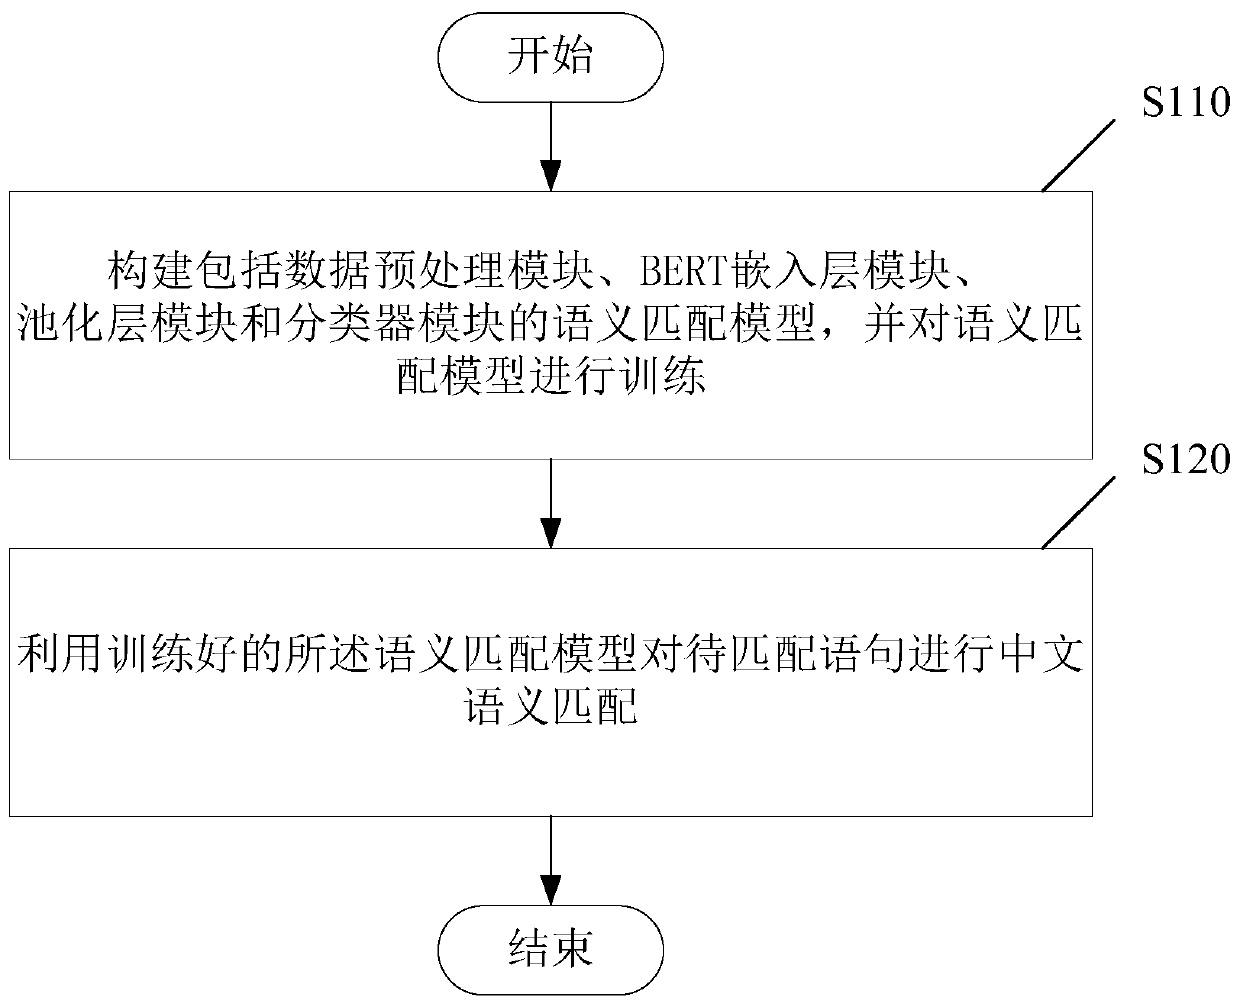 Chinese semantic matching method based on pinyin and BERT embedding